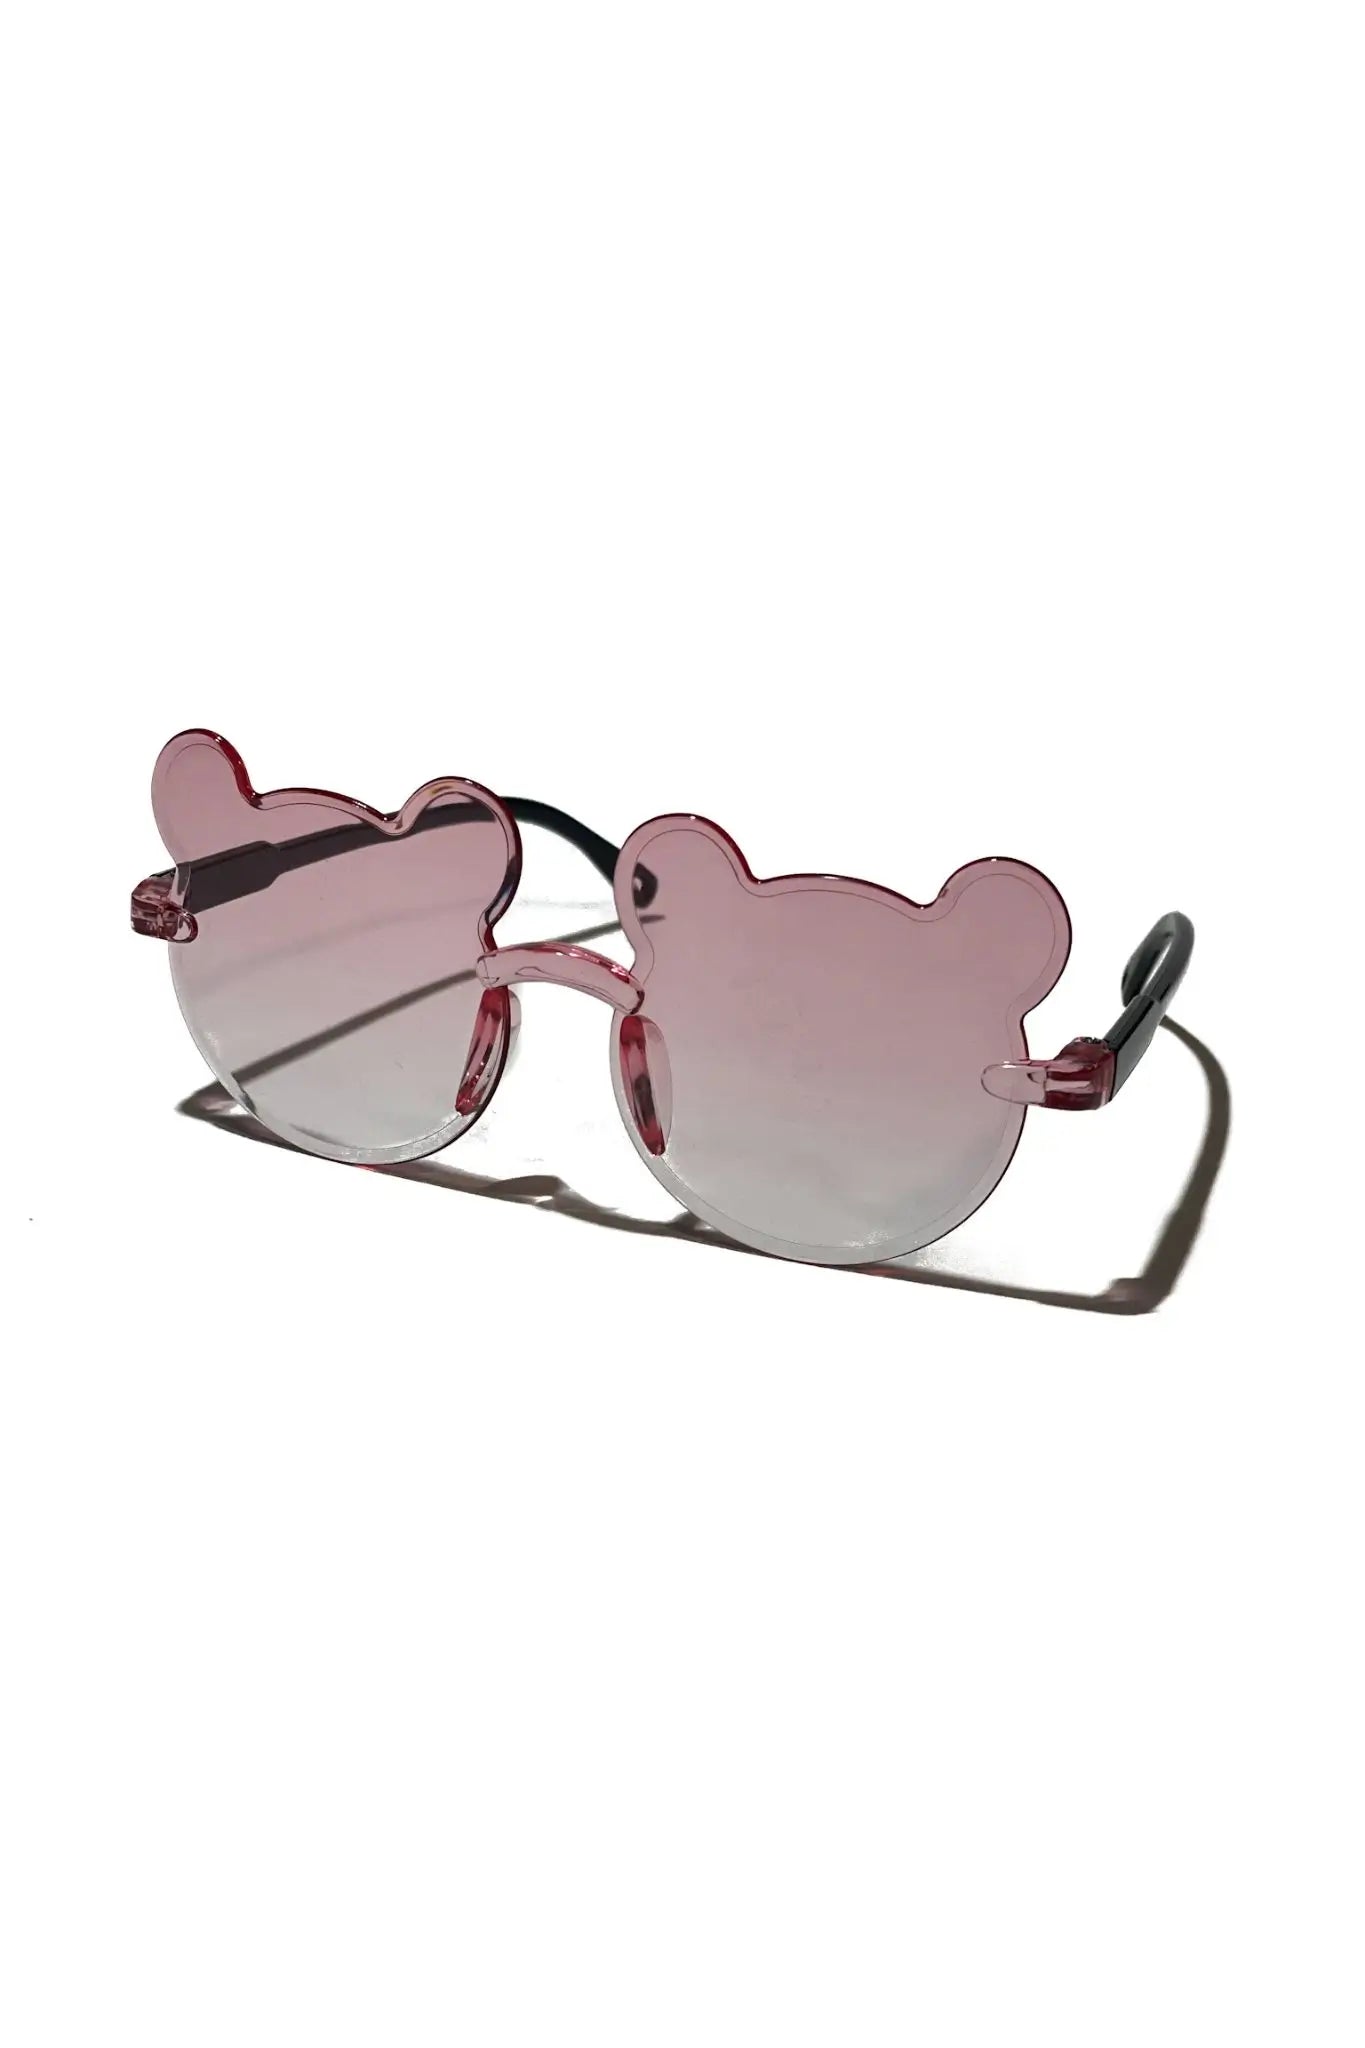 Techno Rave Provokation Pink Bear Shades: Rave Bärensonnenbrille